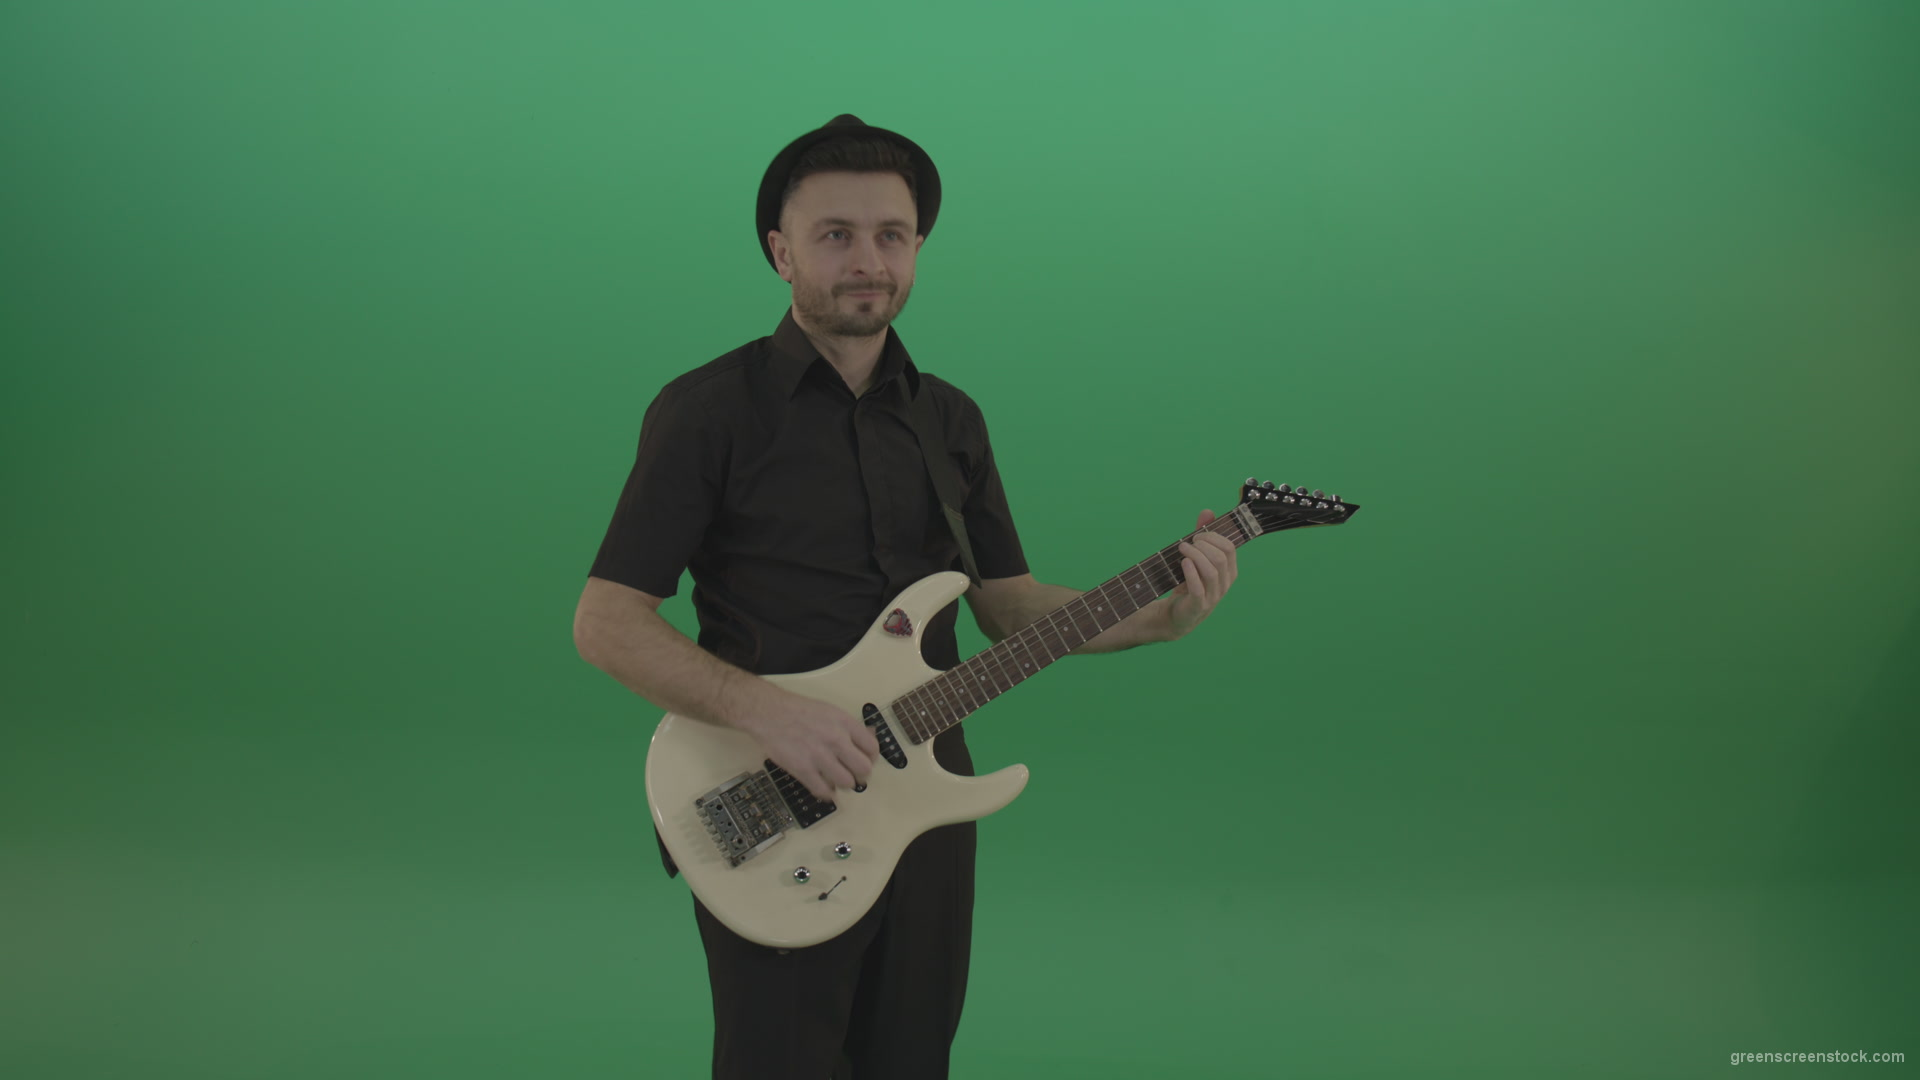 Man-in-black-playing-white-guitar-on-green-screen-1_007 Green Screen Stock